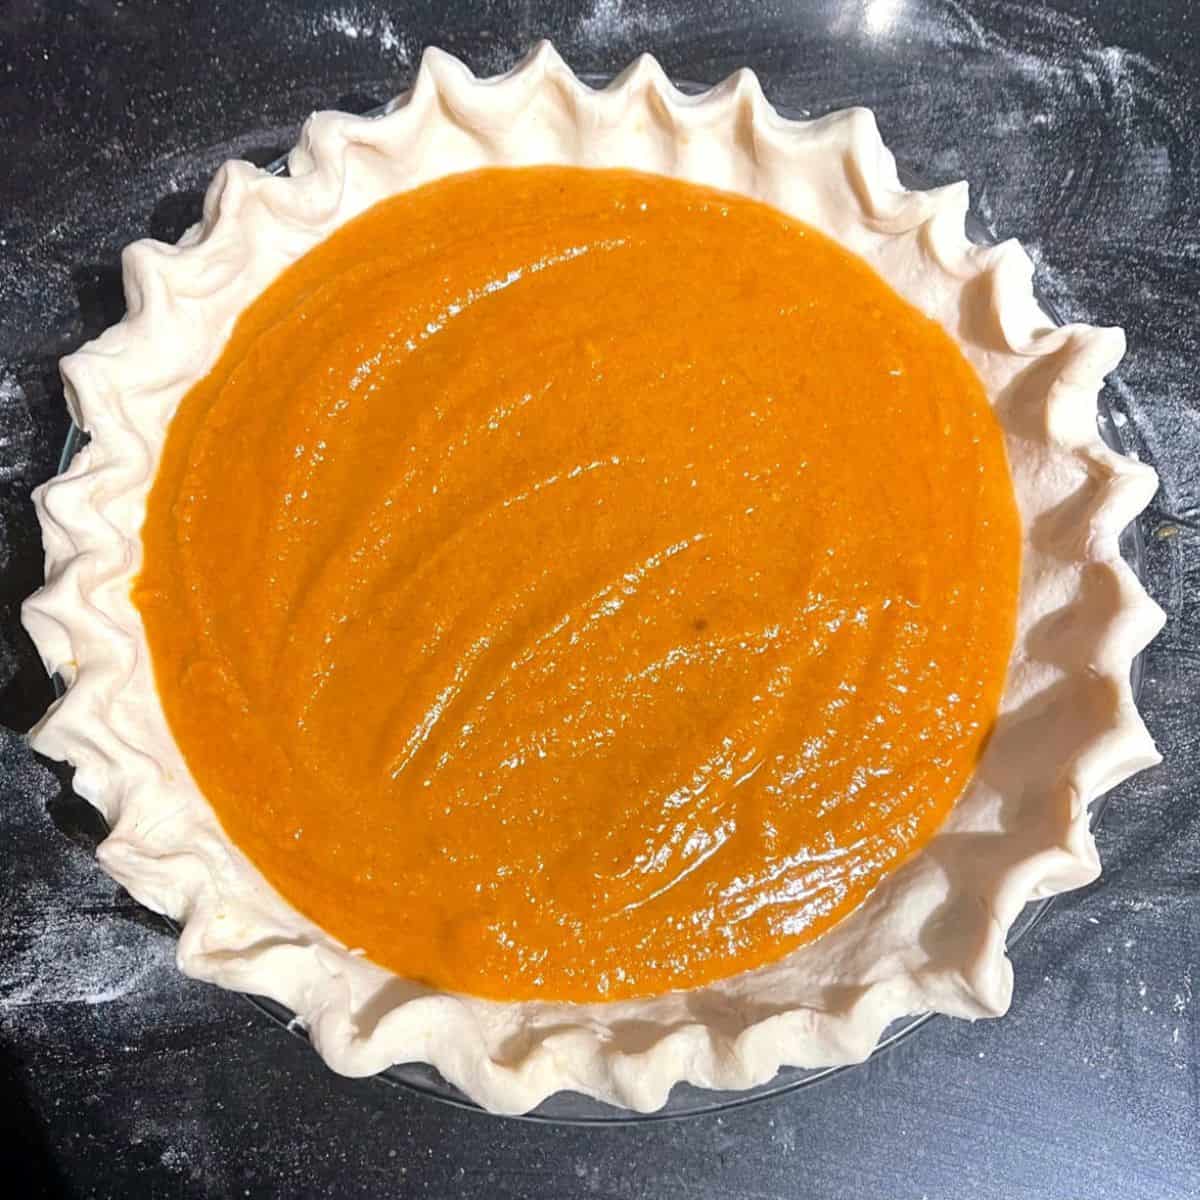 Vegan pumpkin pie before baking.